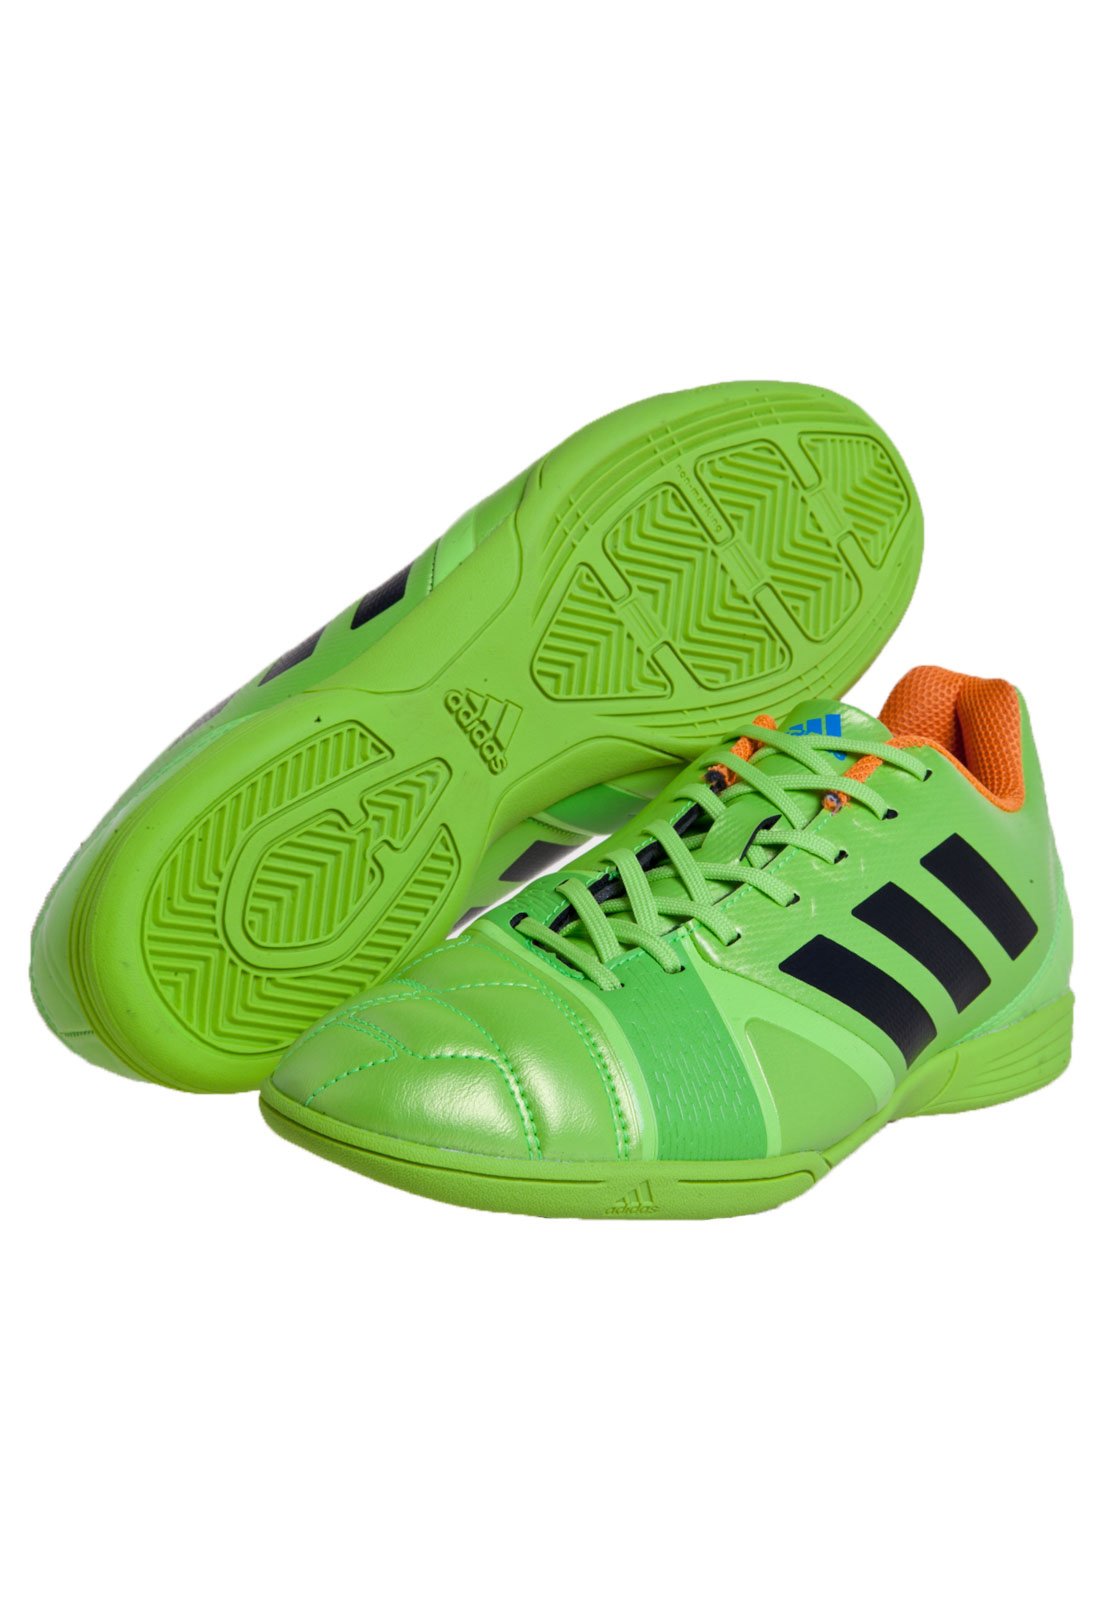 tenis de futsal adidas verde